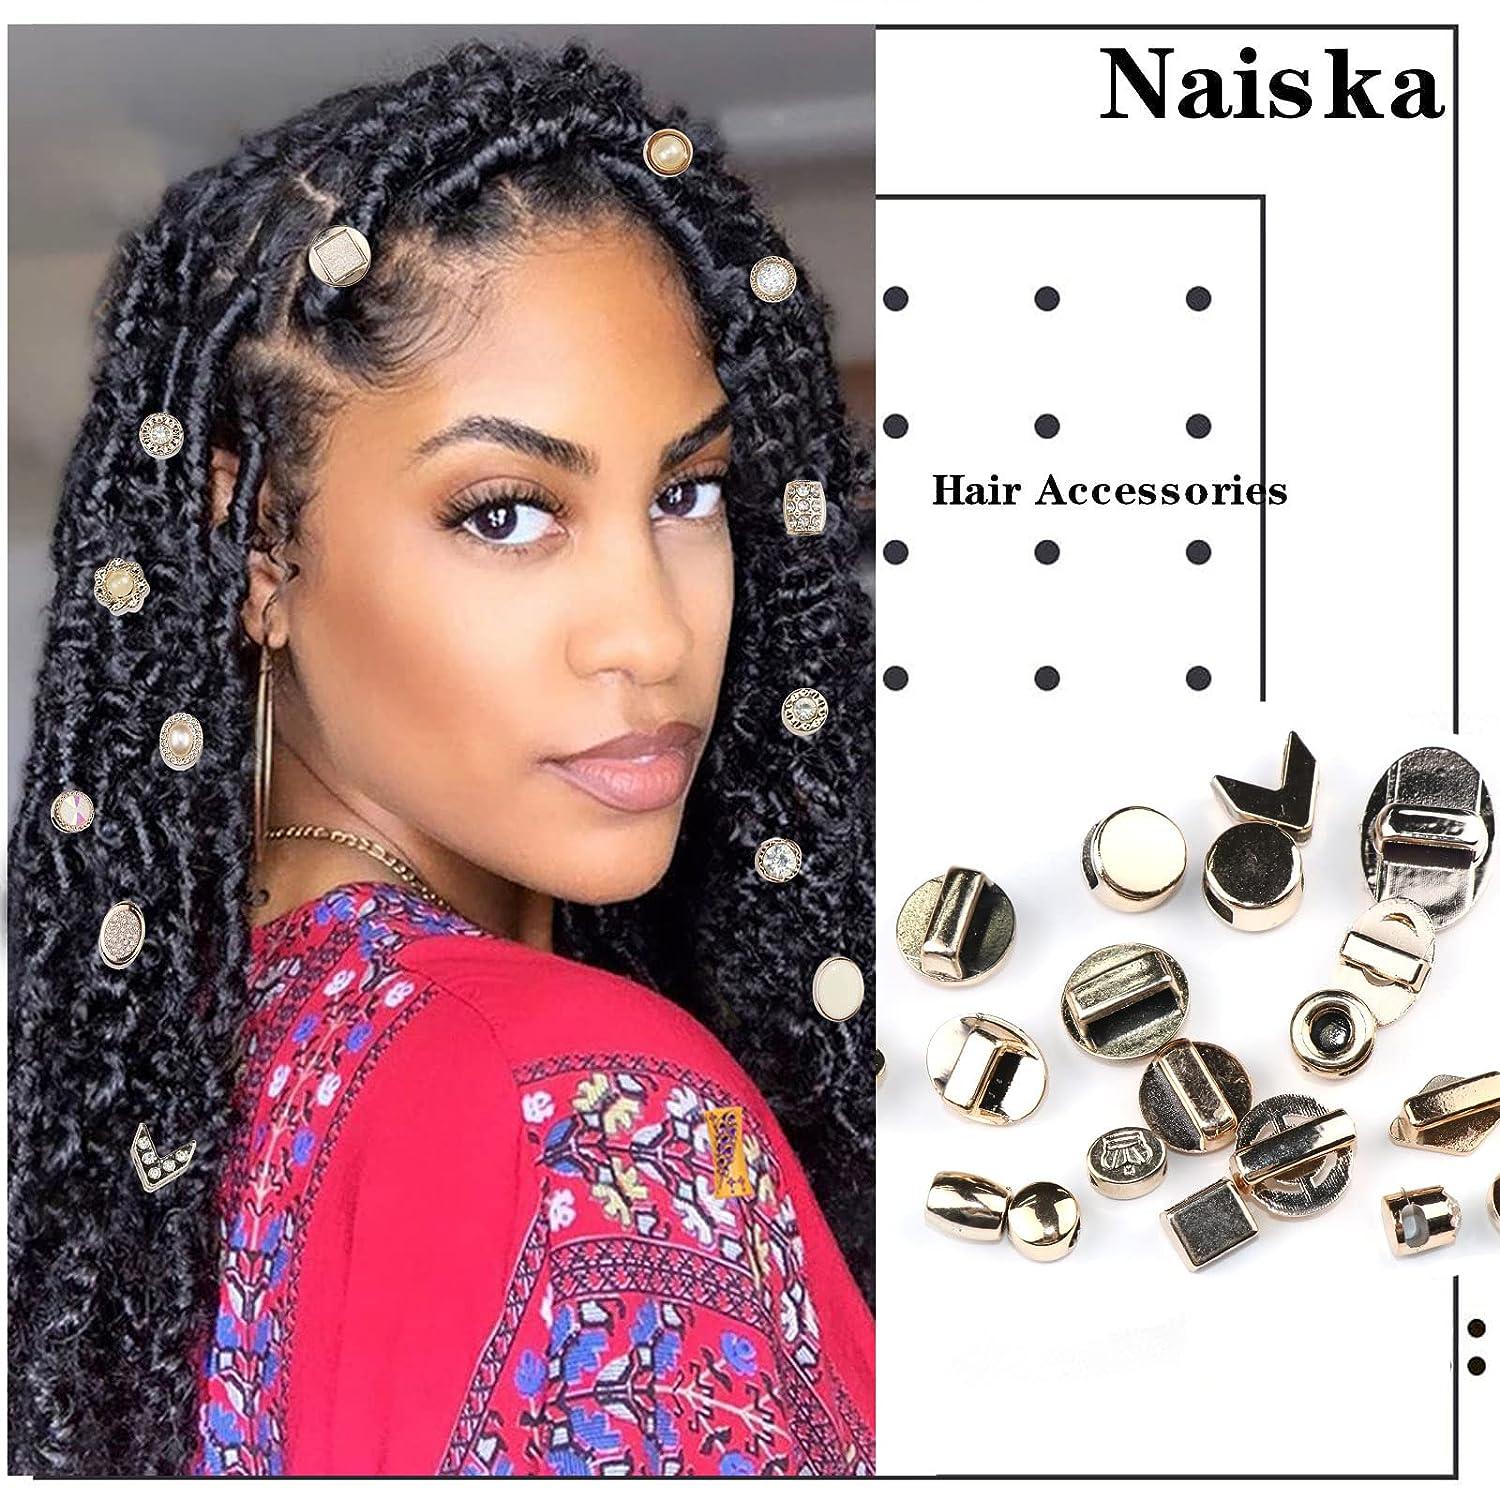 NAISKA 20PCS Seashell Braid Hair Accessories Snake Cross Hair